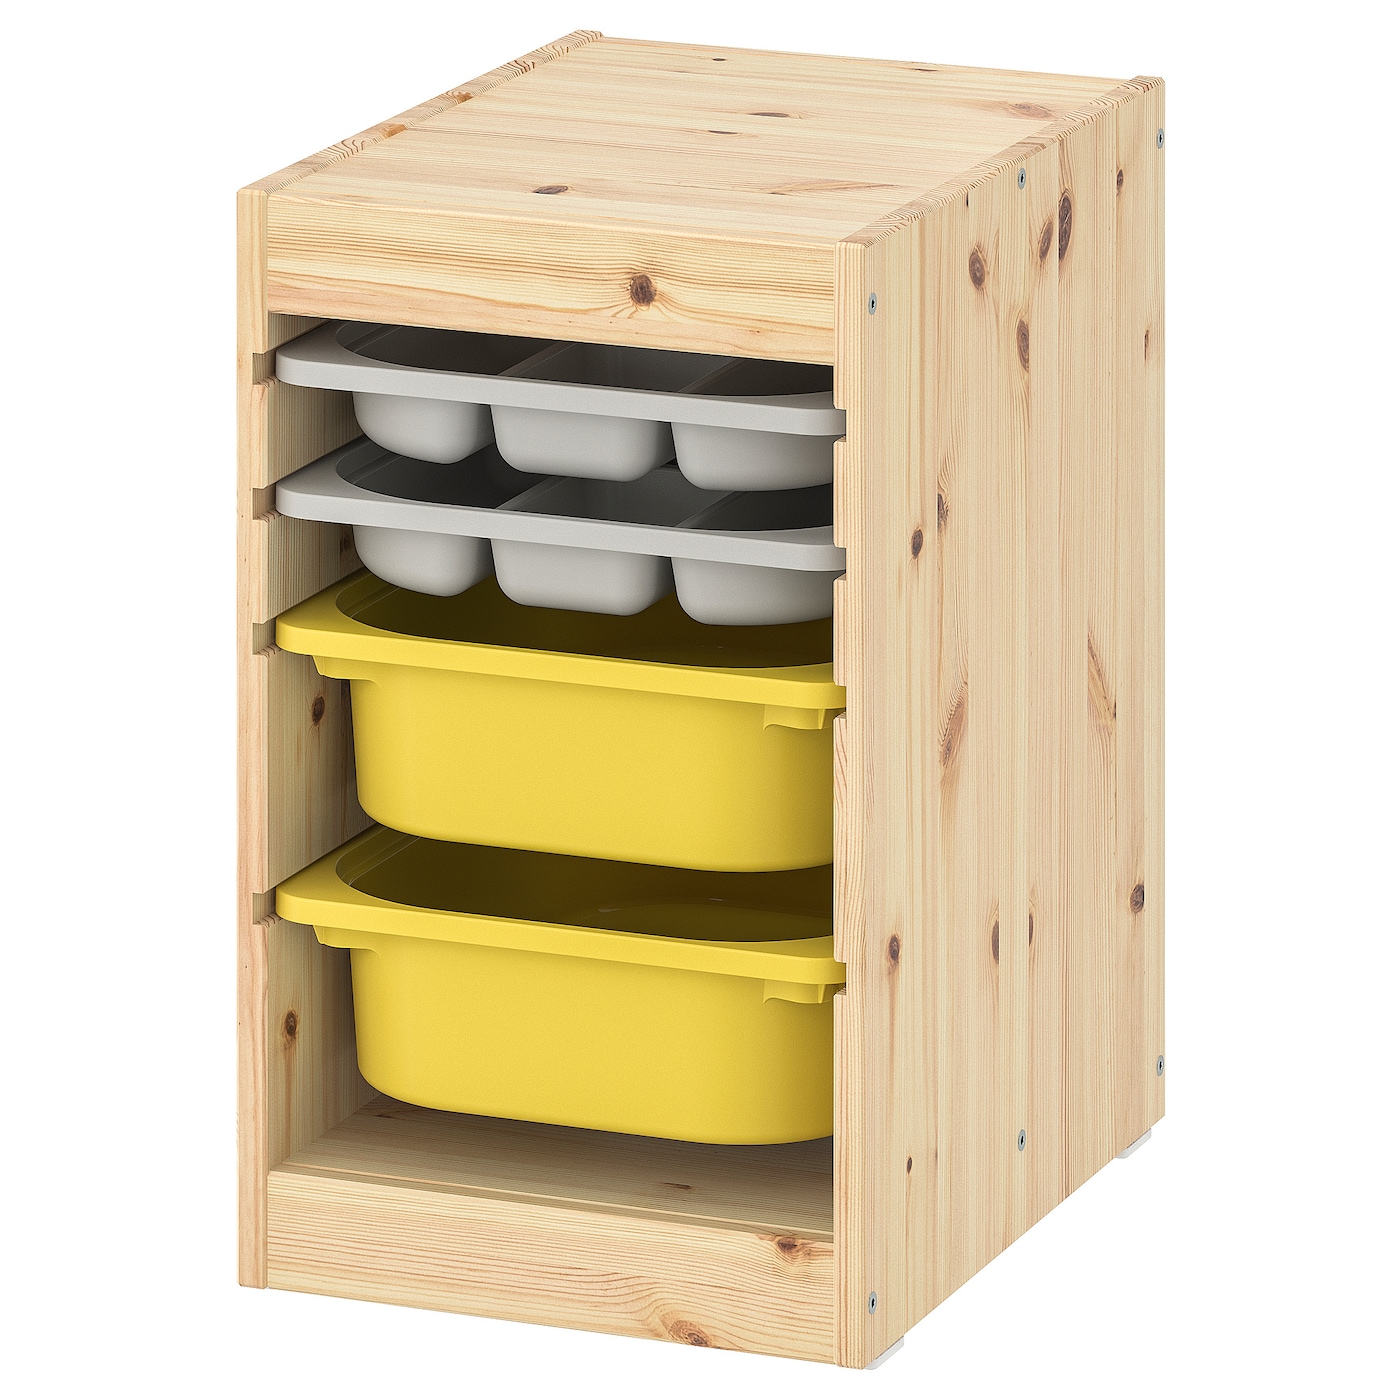 Стеллаж - IKEA TROFAST, 32х44х52 см, сосна/желтый/бело-серый, ТРУФАСТ ИКЕА